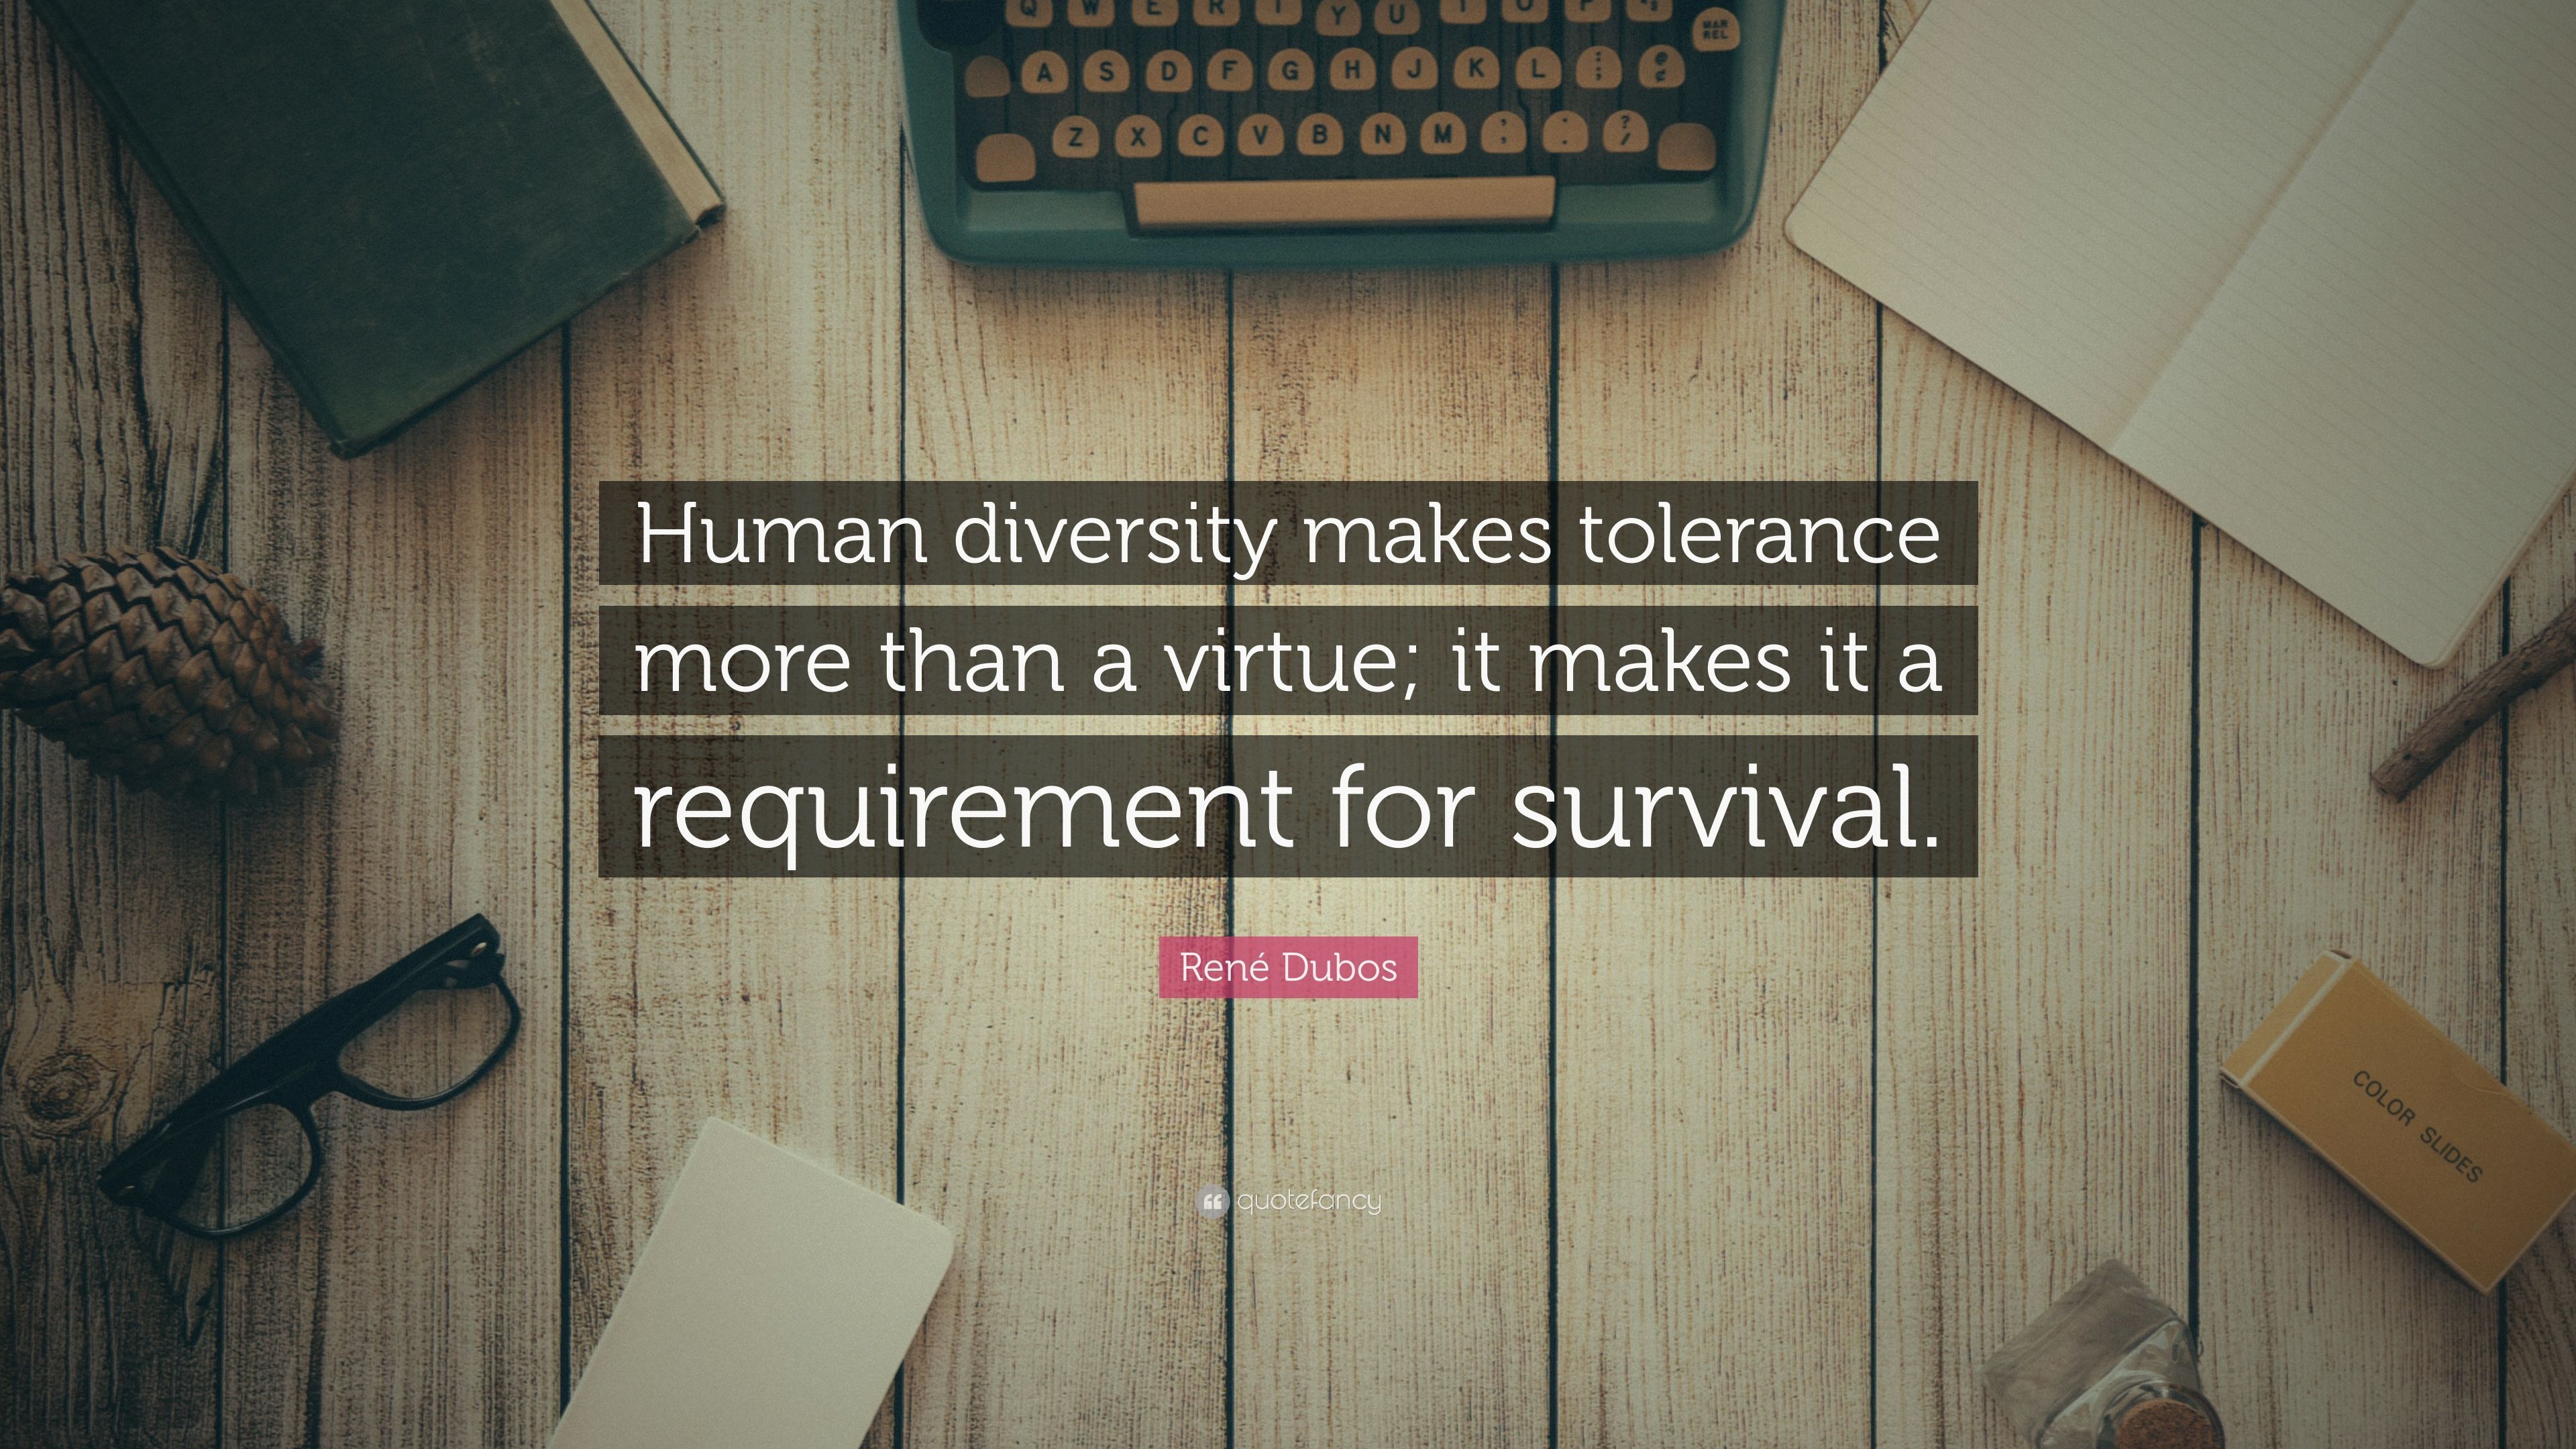 René Dubos Quote: “Human diversity makes tolerance more than a